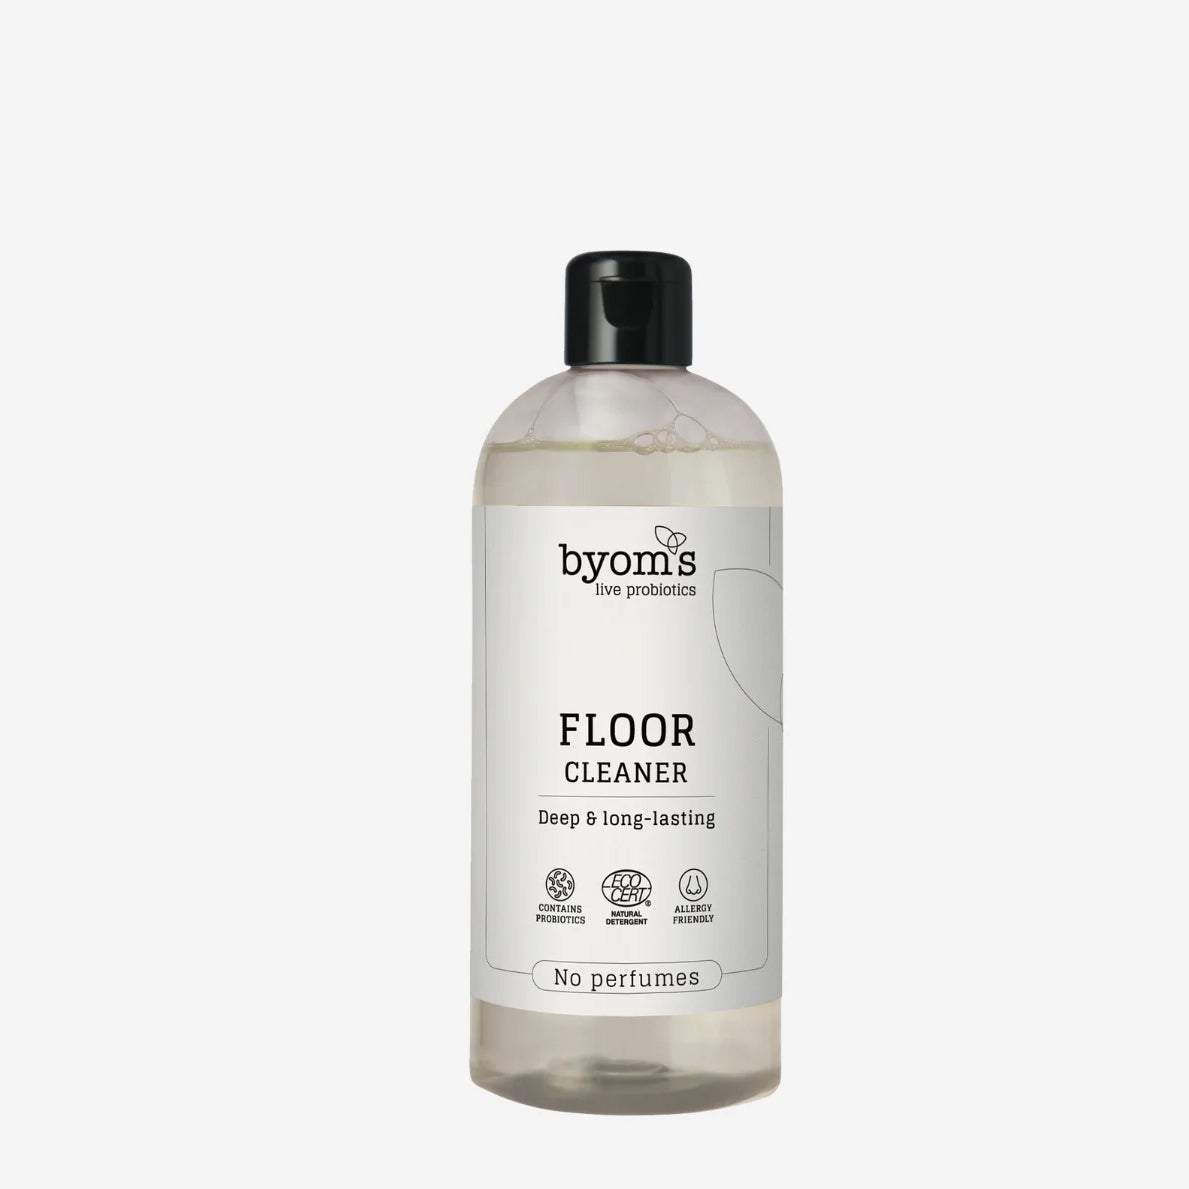 Billede af Probiotic Floor Cleaner, No Perfumes, 400 ml.